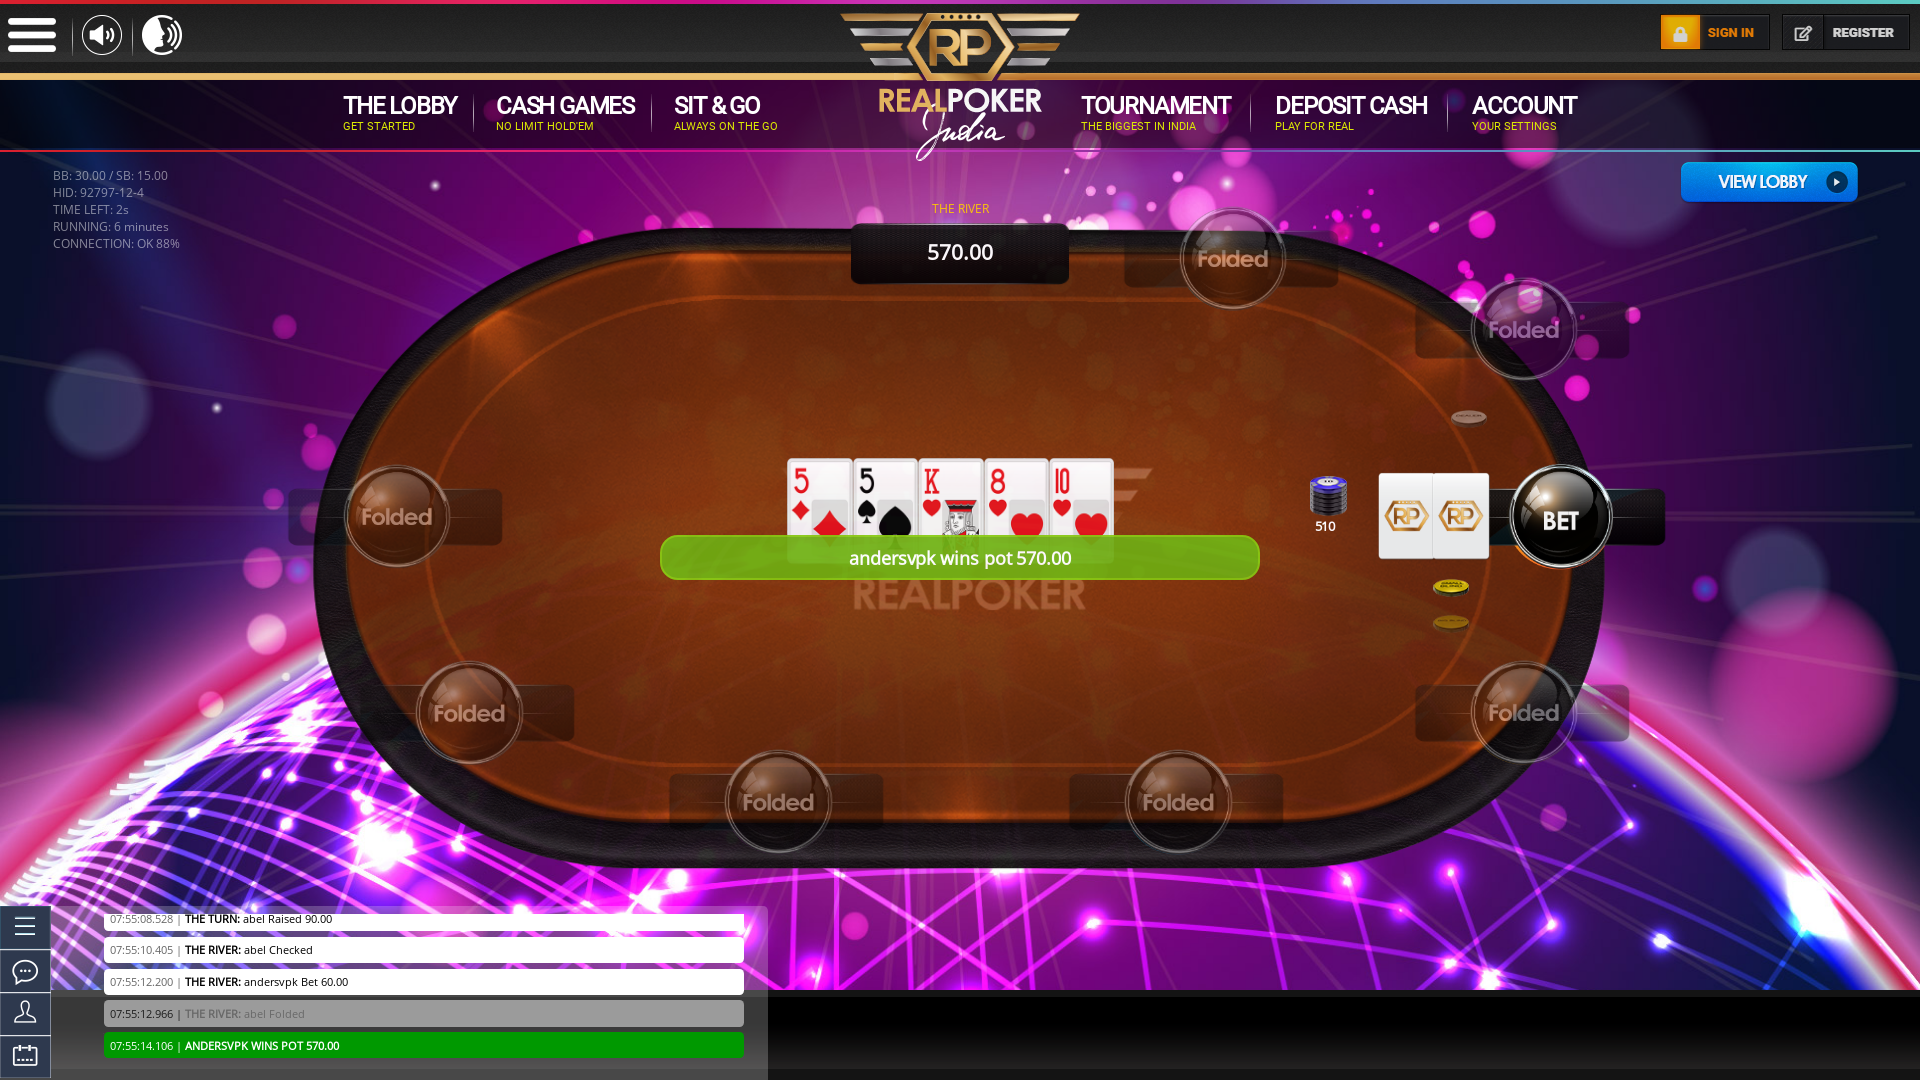 Kolkata Casino Poker from 7th July